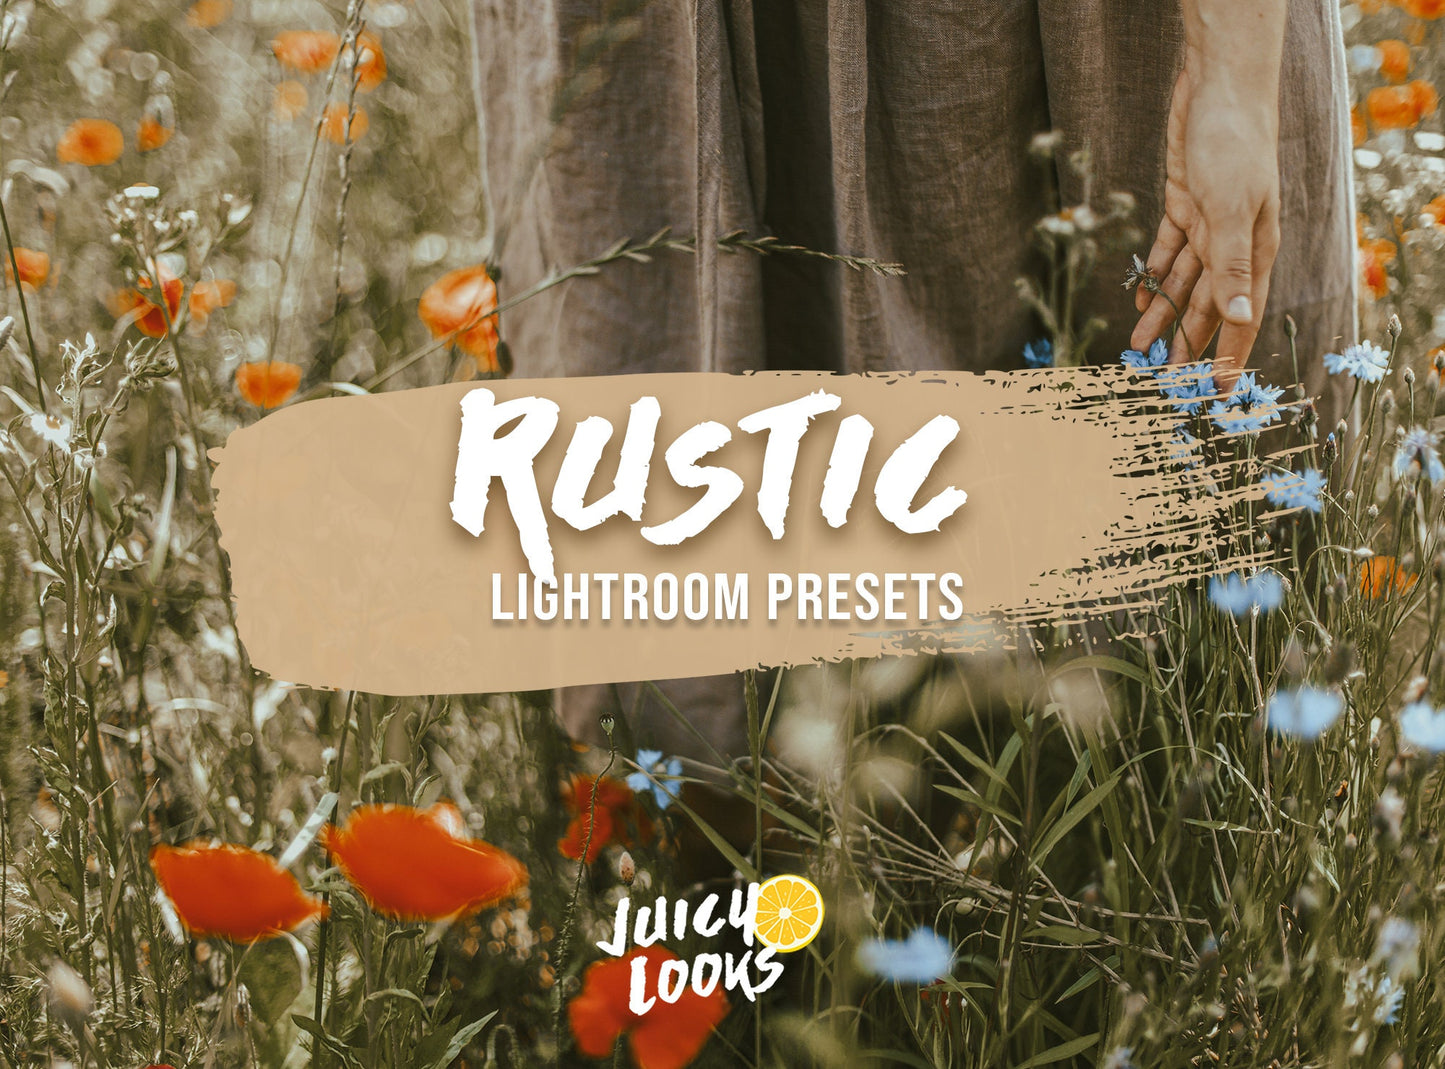 Rustic Lightroom Presets for Mobile & Desktop - Juicy Looks Presets